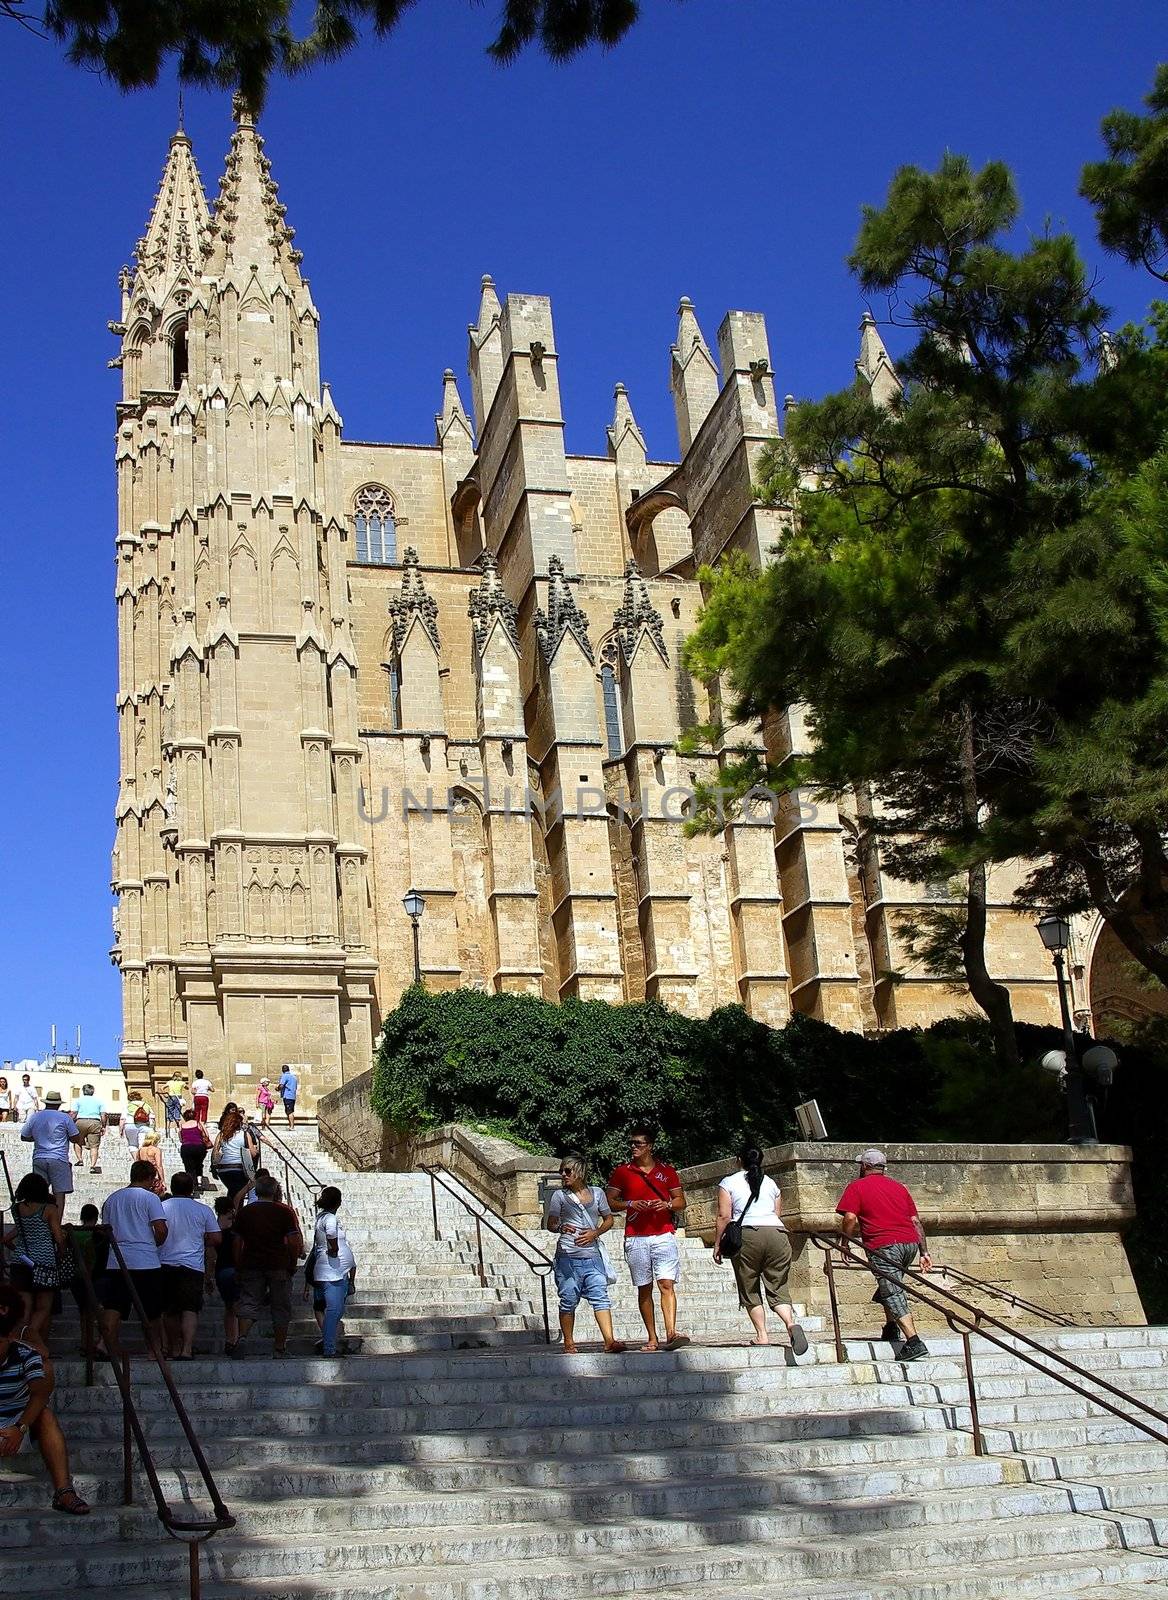 Cathedral La Seu in Palma Mallorca by FotoFrank